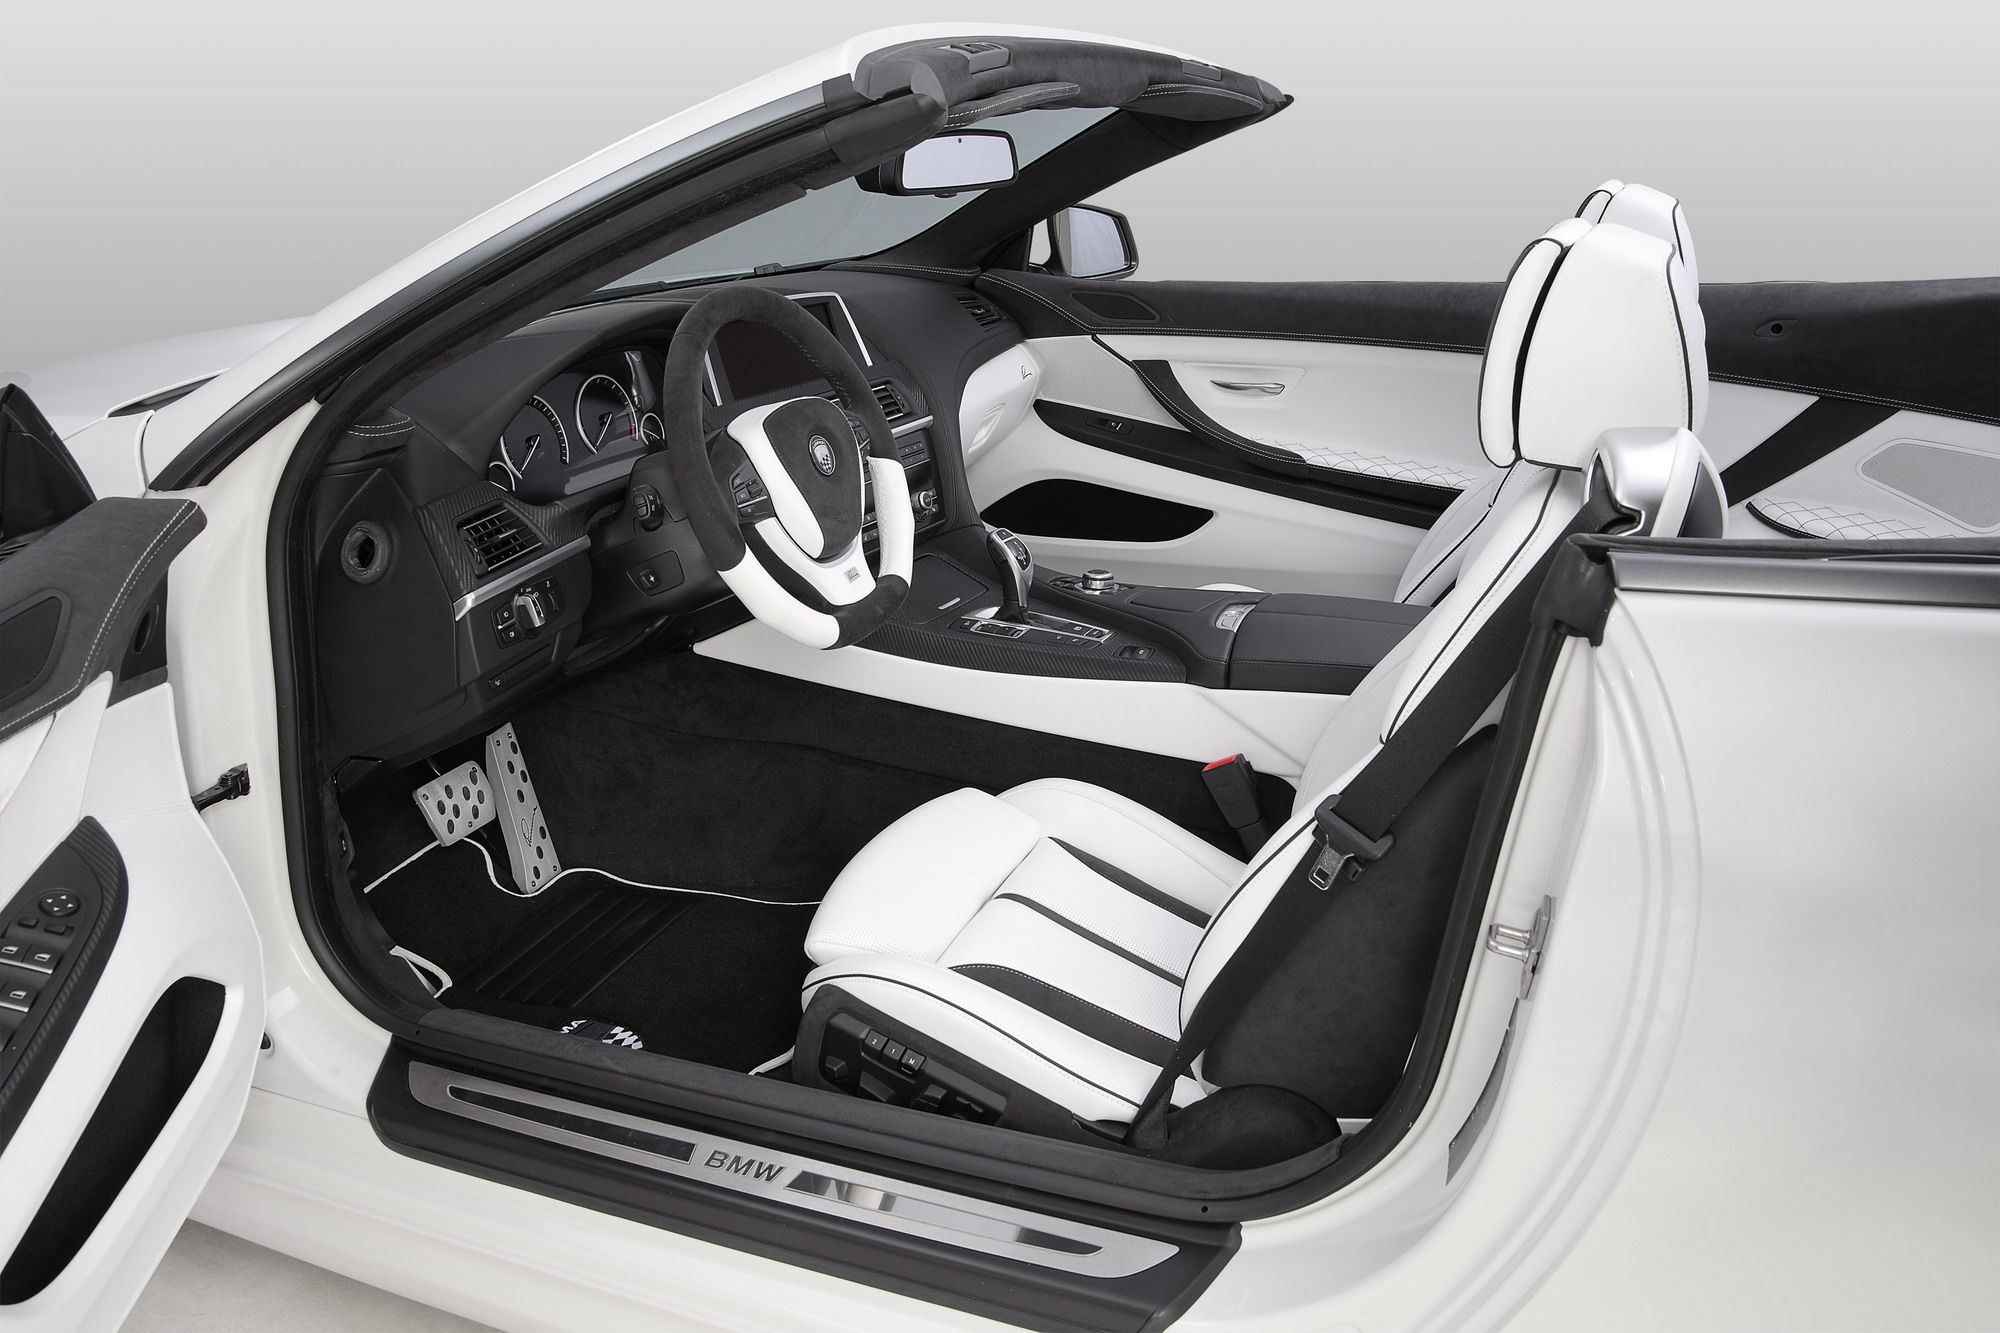 2012 BMW 650i Convertible CLR 600 GT by Lumma Design